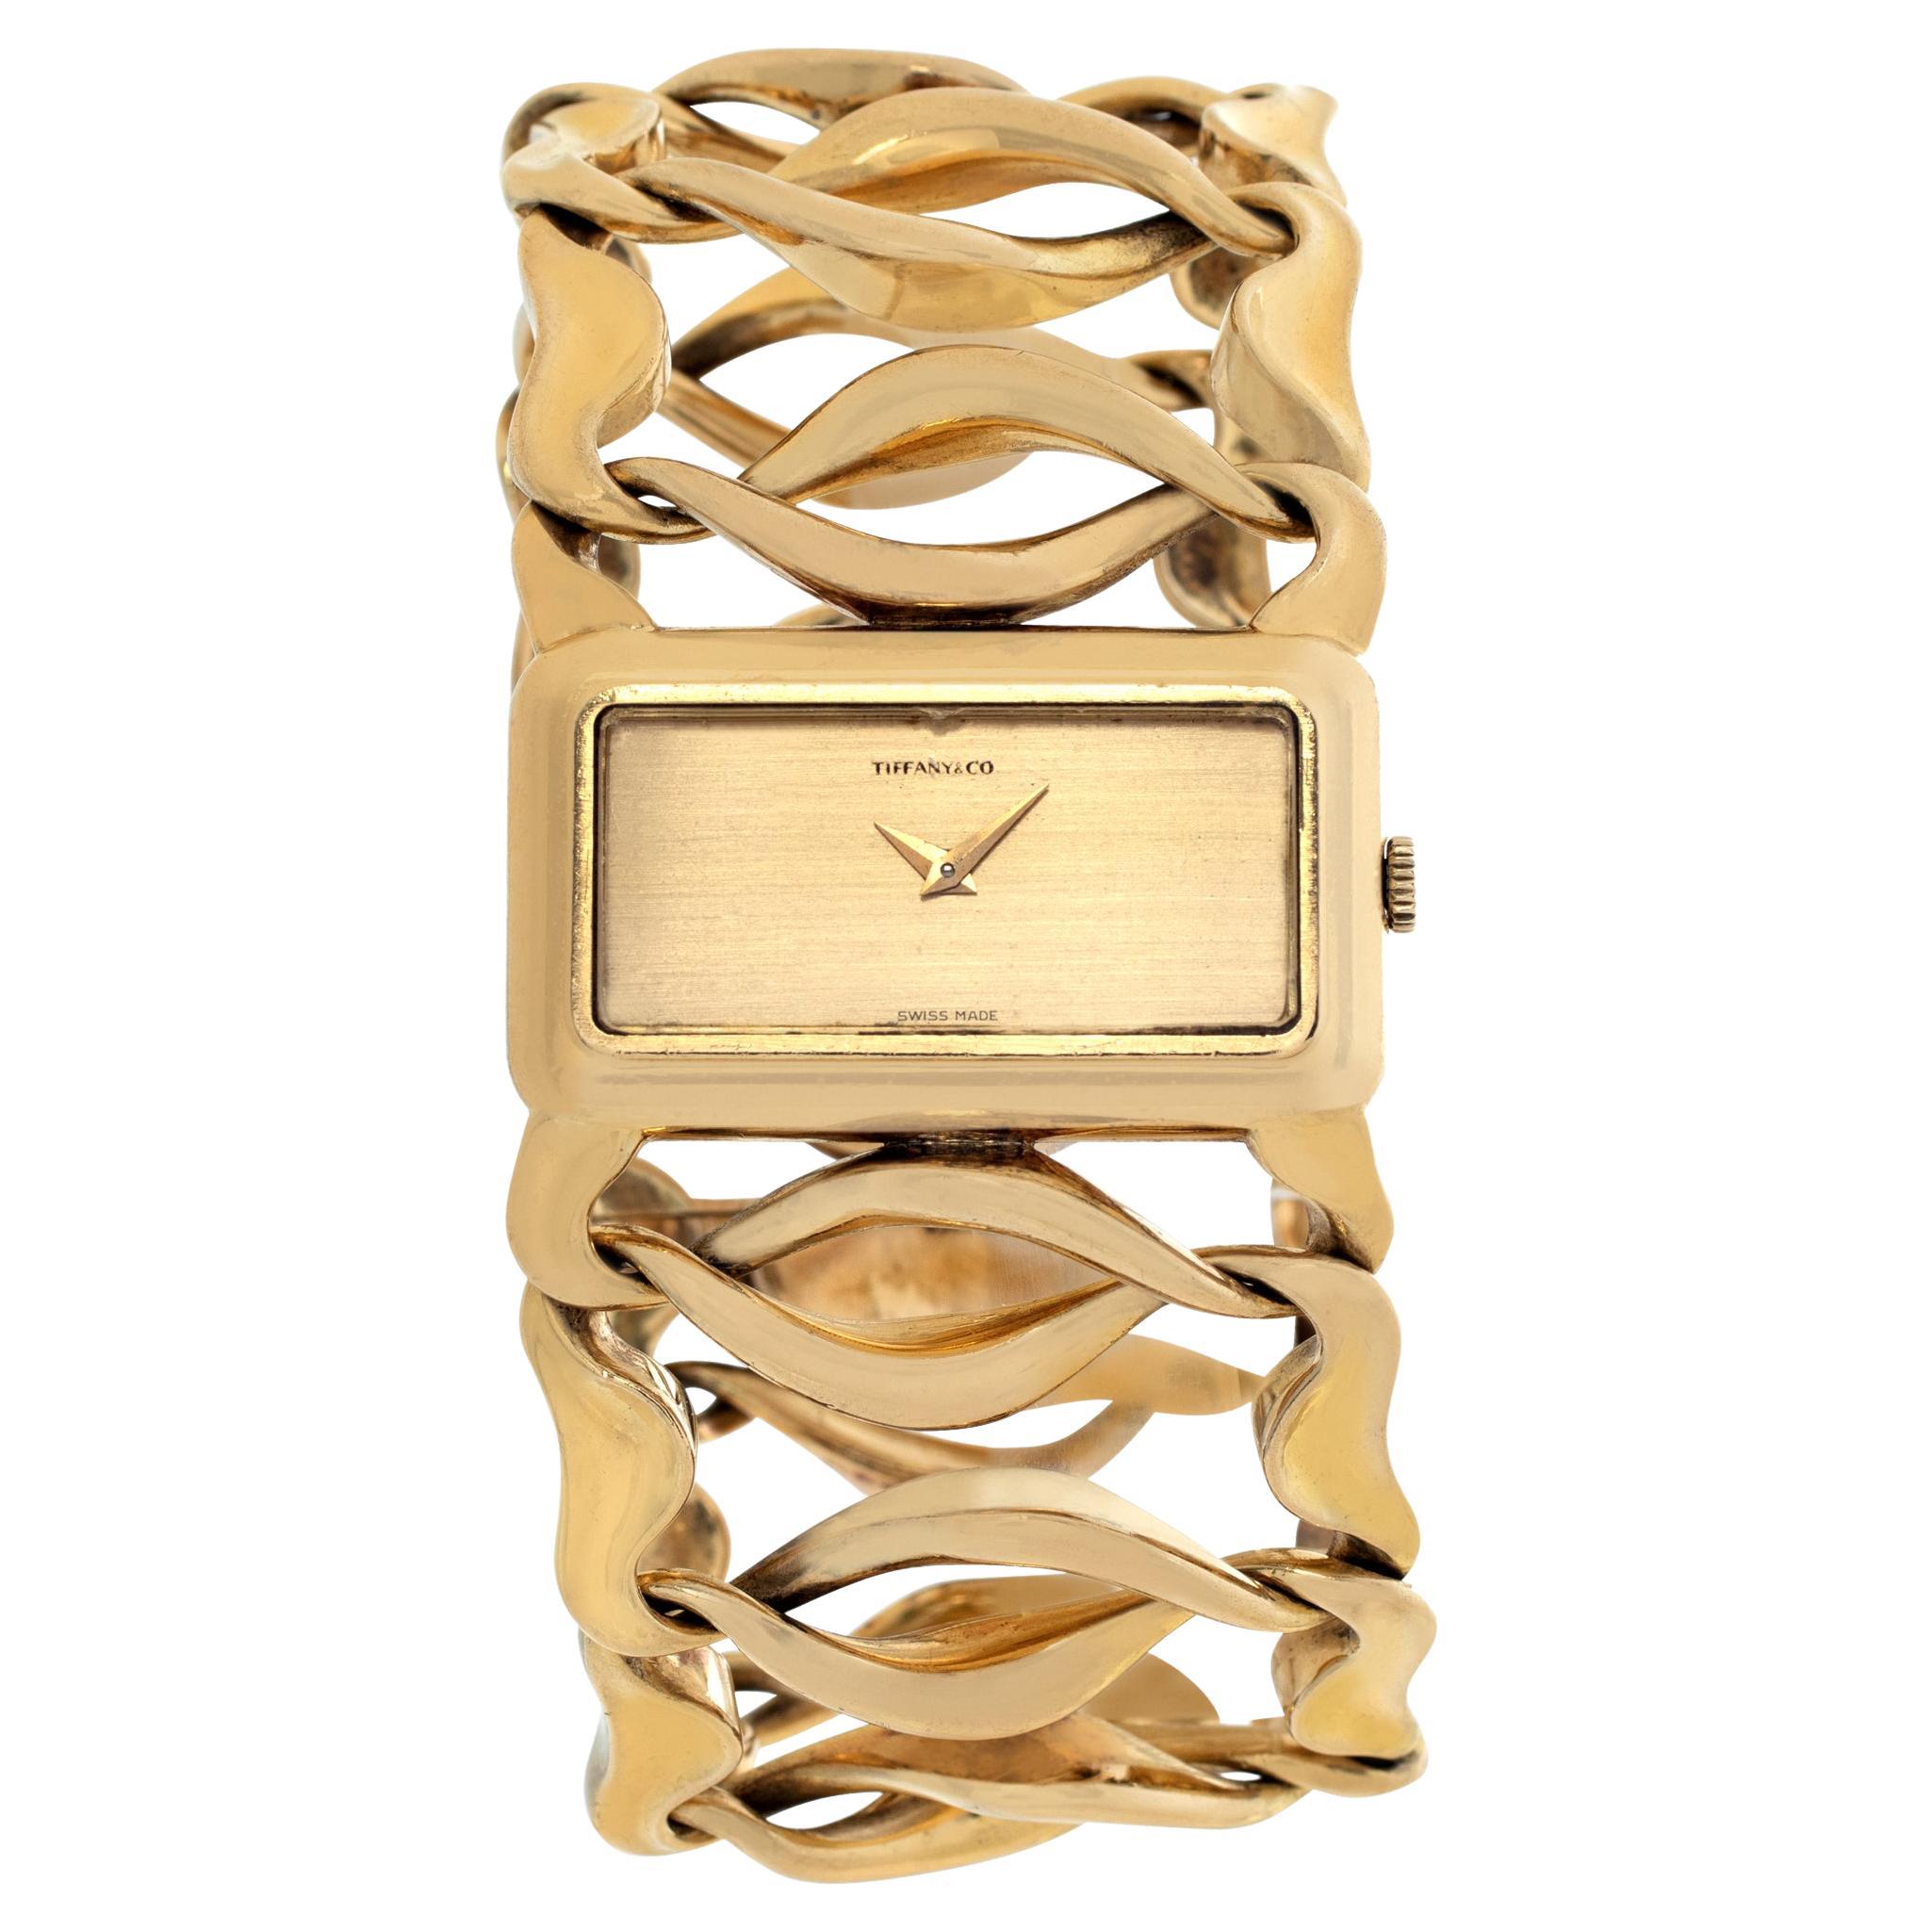 Tiffany & Co. Classic 18k Yellow Gold Bracelet Watch